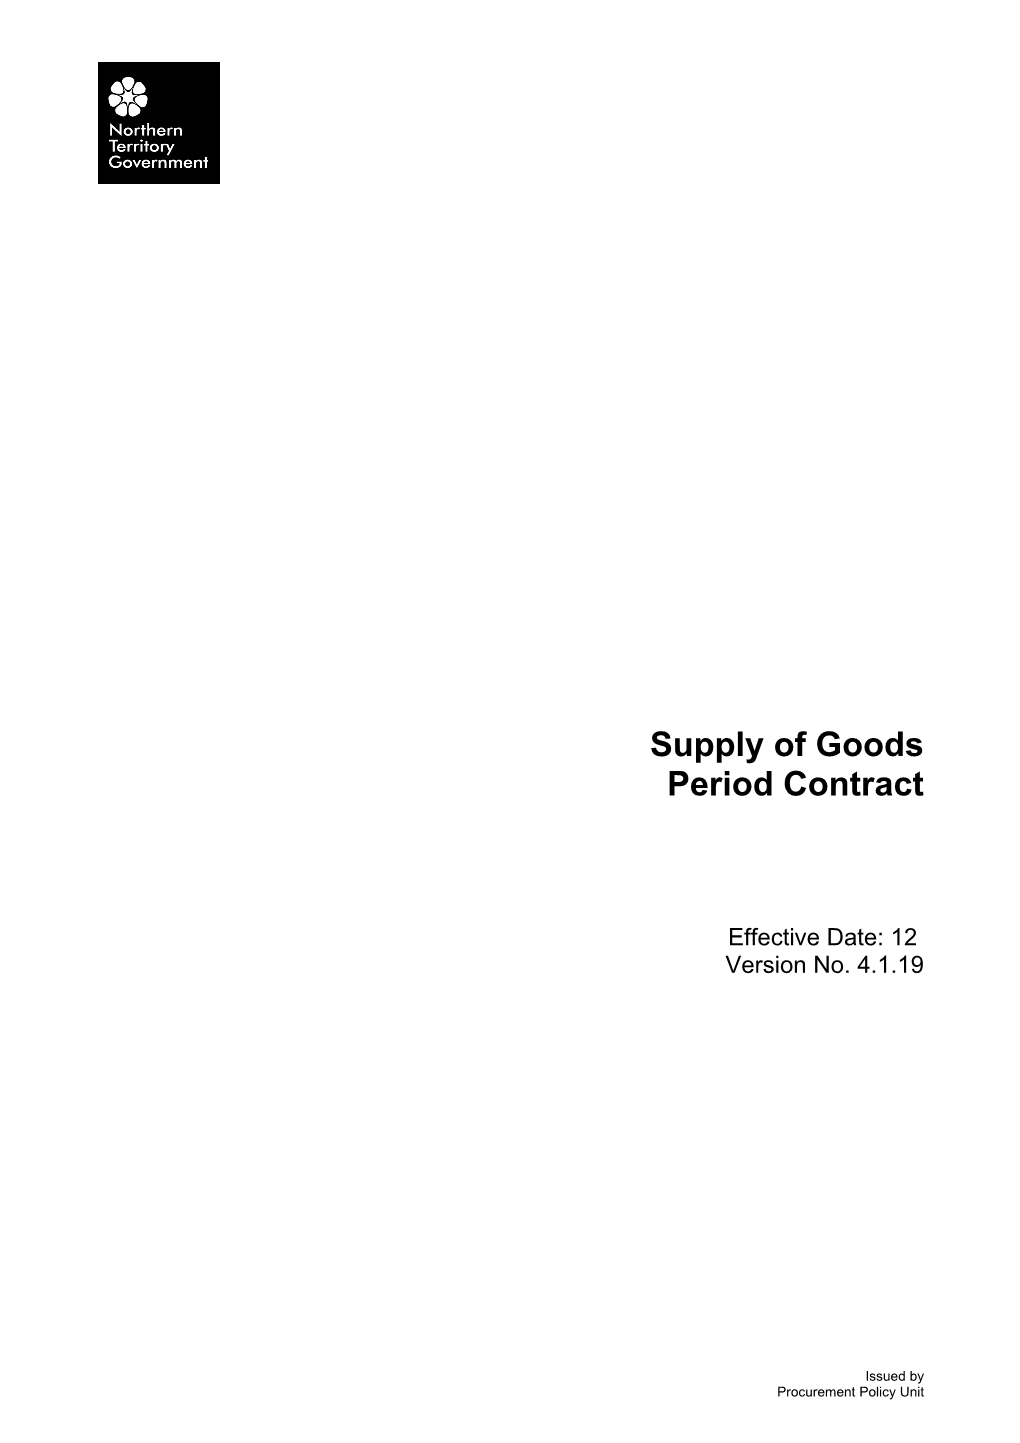 Supply of Goods Period - V 4.1.19 (12 December 2008)